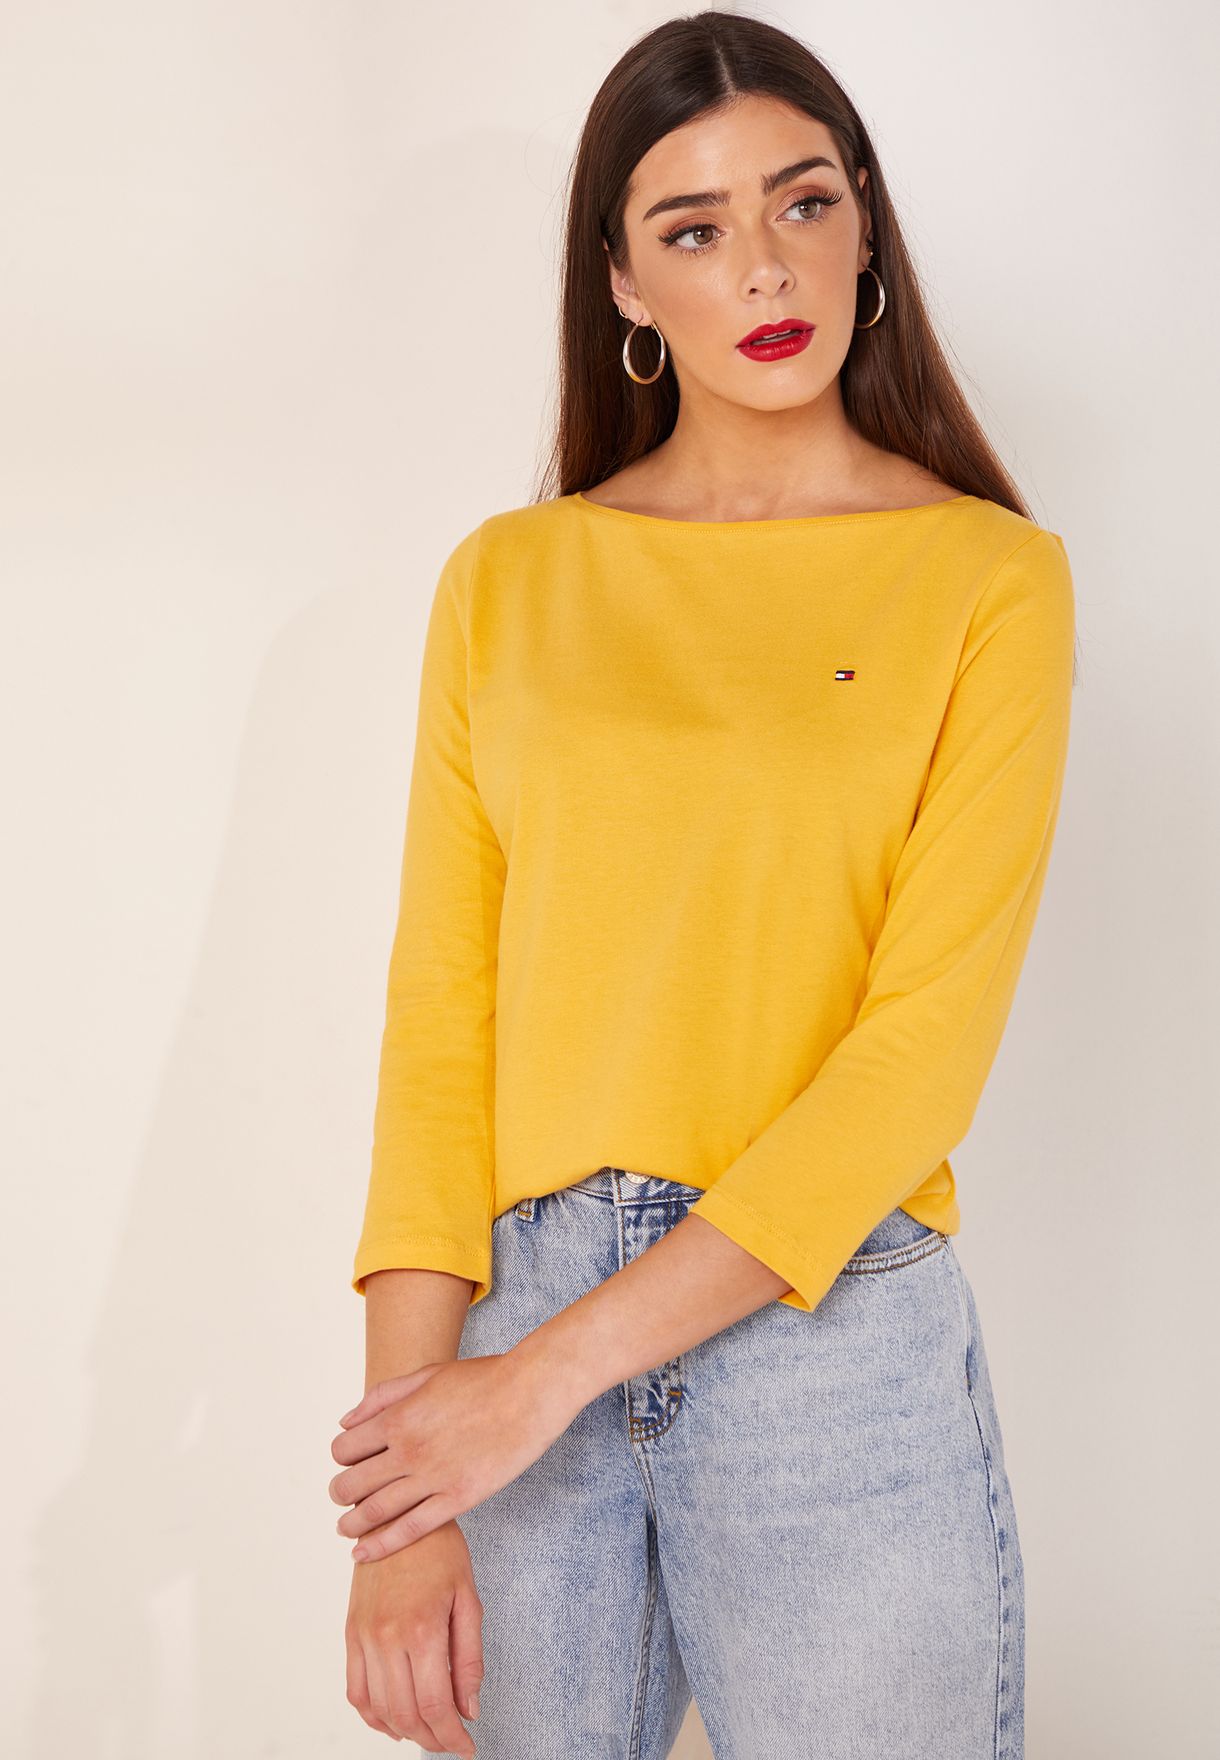 womens yellow tommy hilfiger shirt